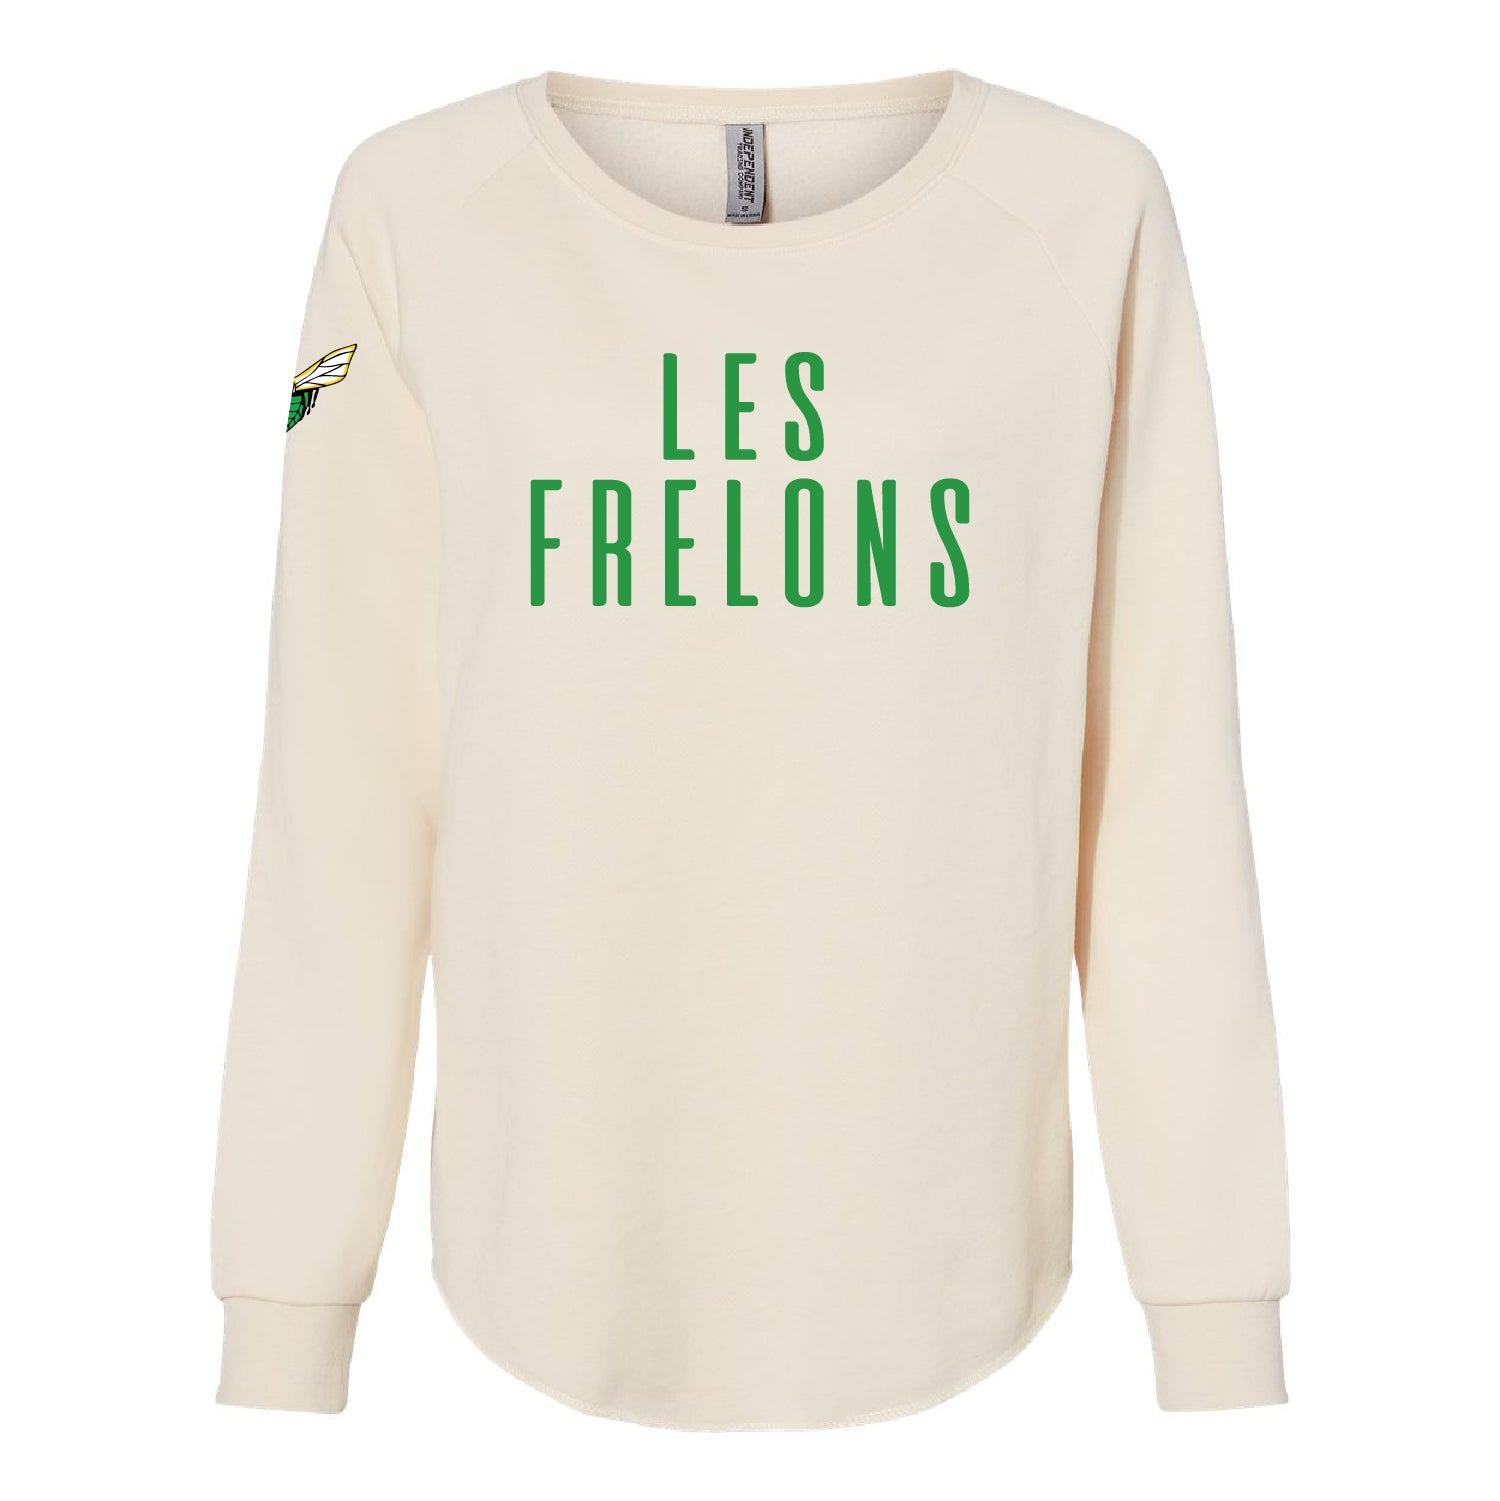 LES FRELONS – LADIES SWEATSHIRT - DSP On Demand